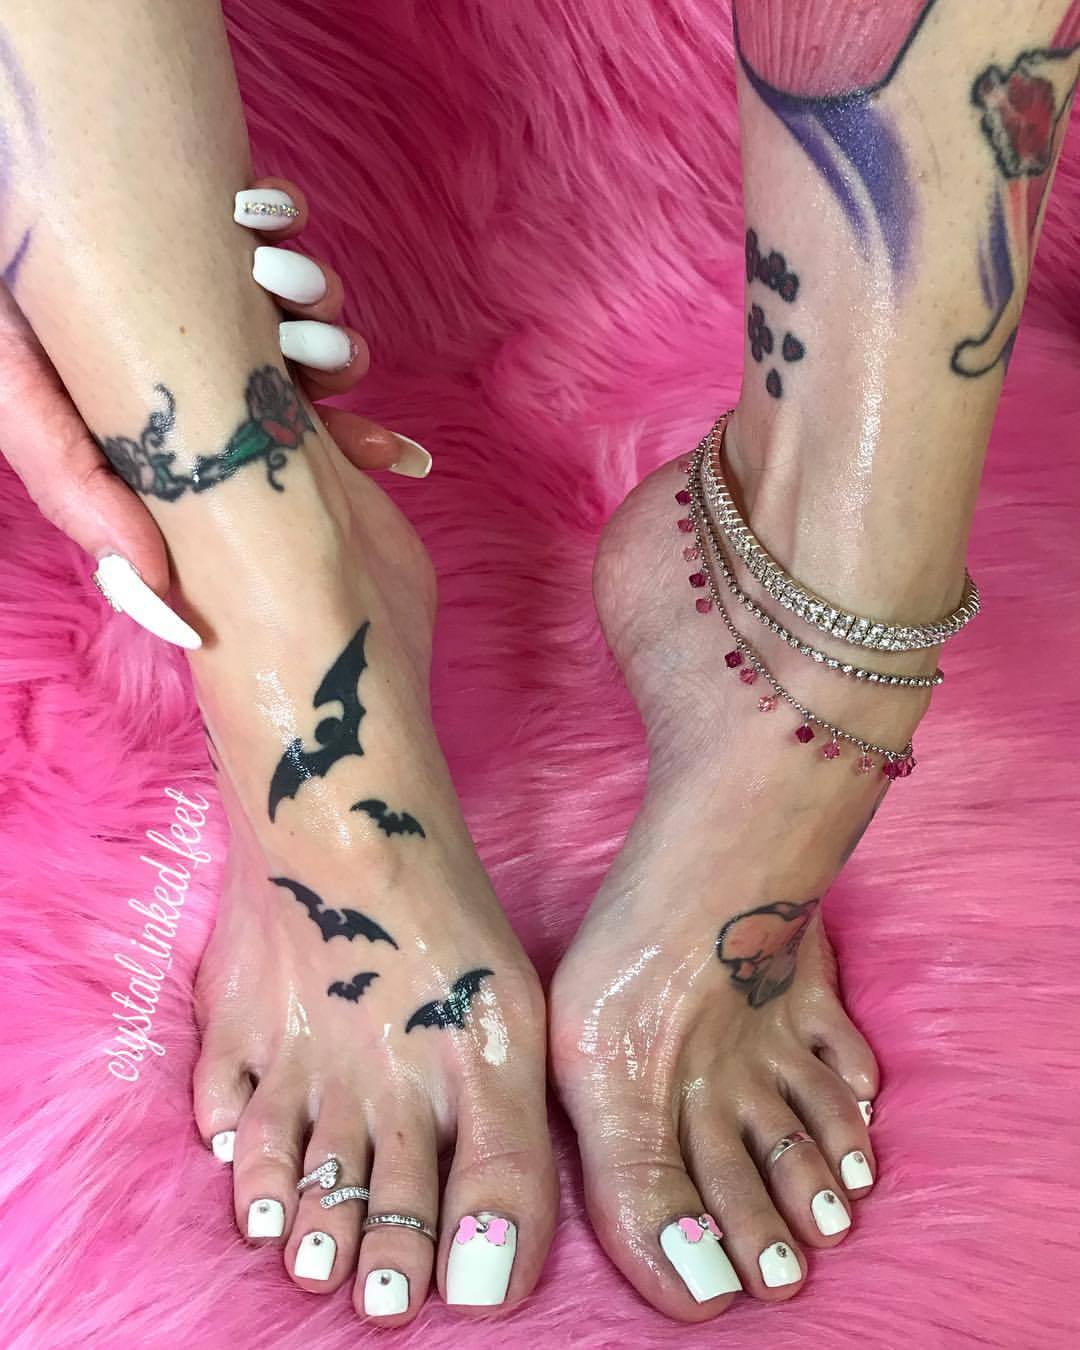 Tattoo artists foot fetish affair